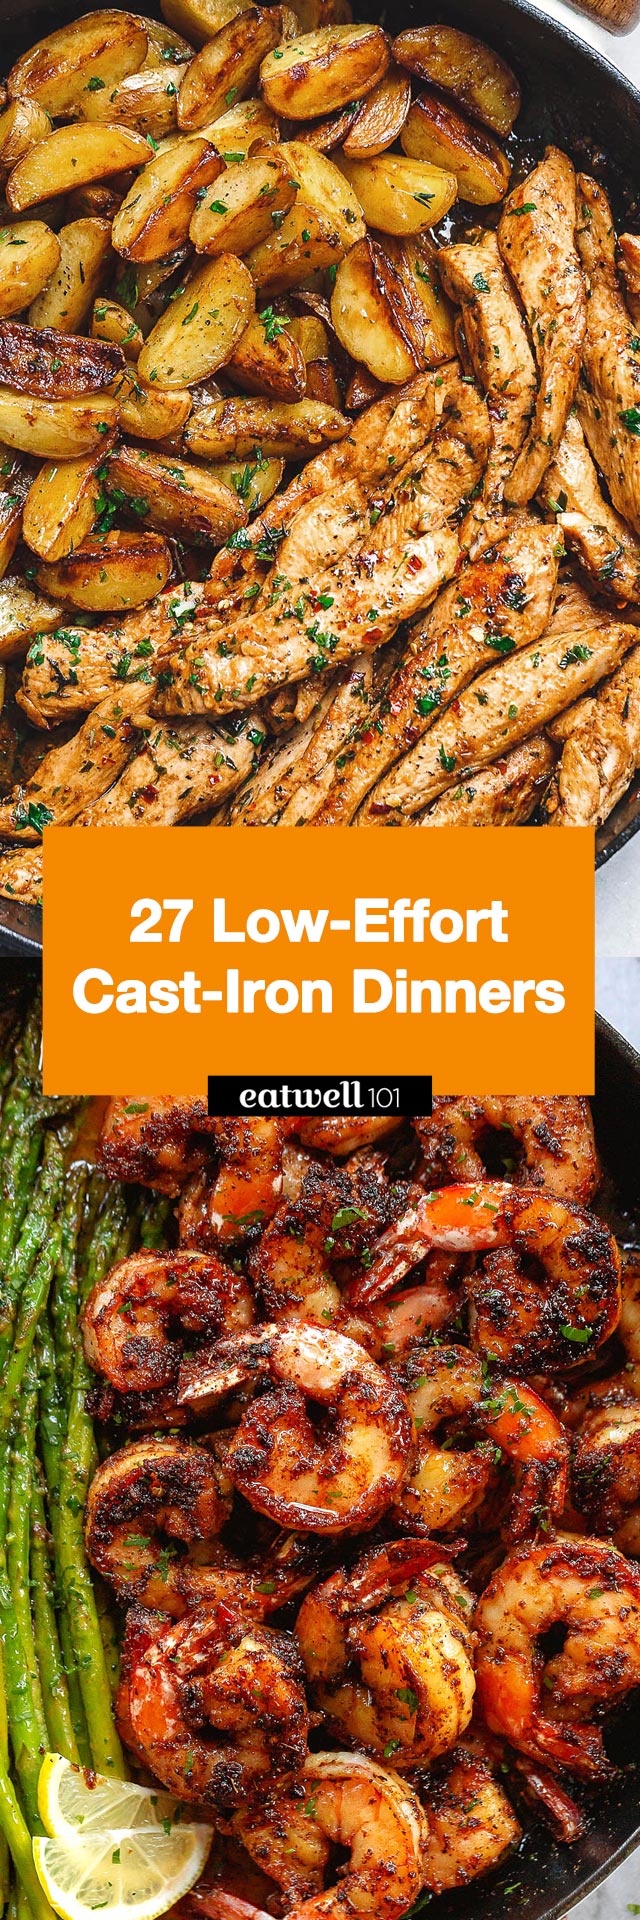 https://www.eatwell101.com/wp-content/uploads/2020/11/cast-iron-dinners.jpg